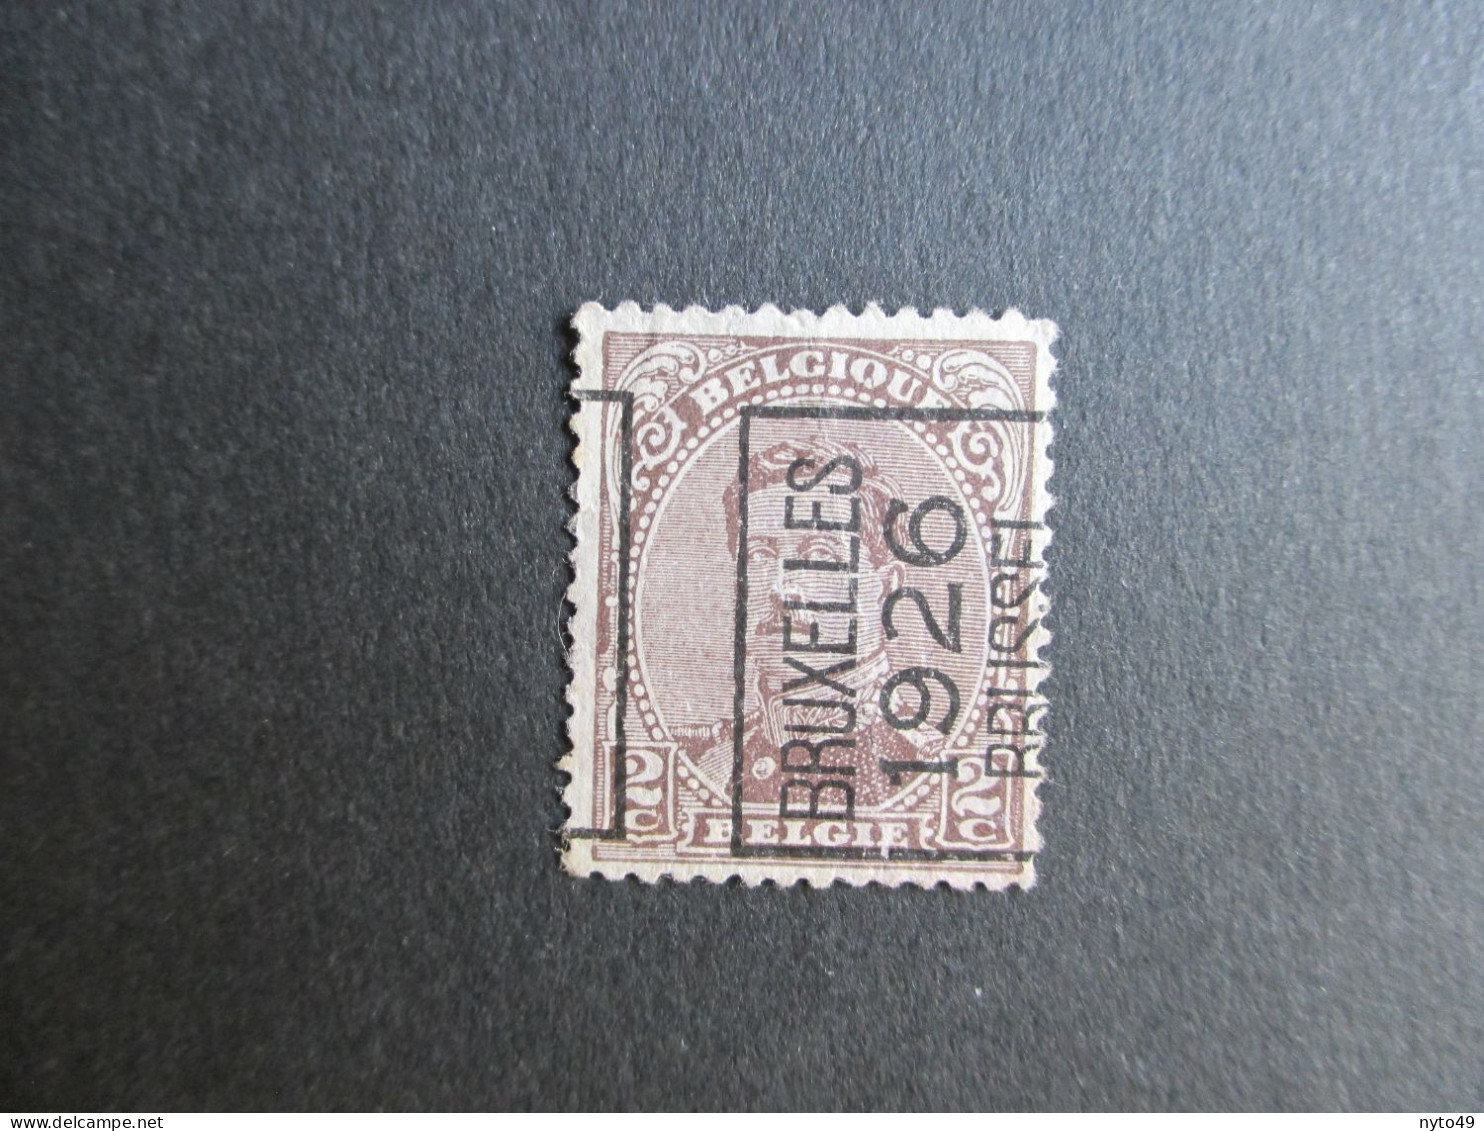 Nr 136 Type 1 - PREO - Var. Wit Punt Onder Laatste "E" Van België - 1915-1920 Albert I